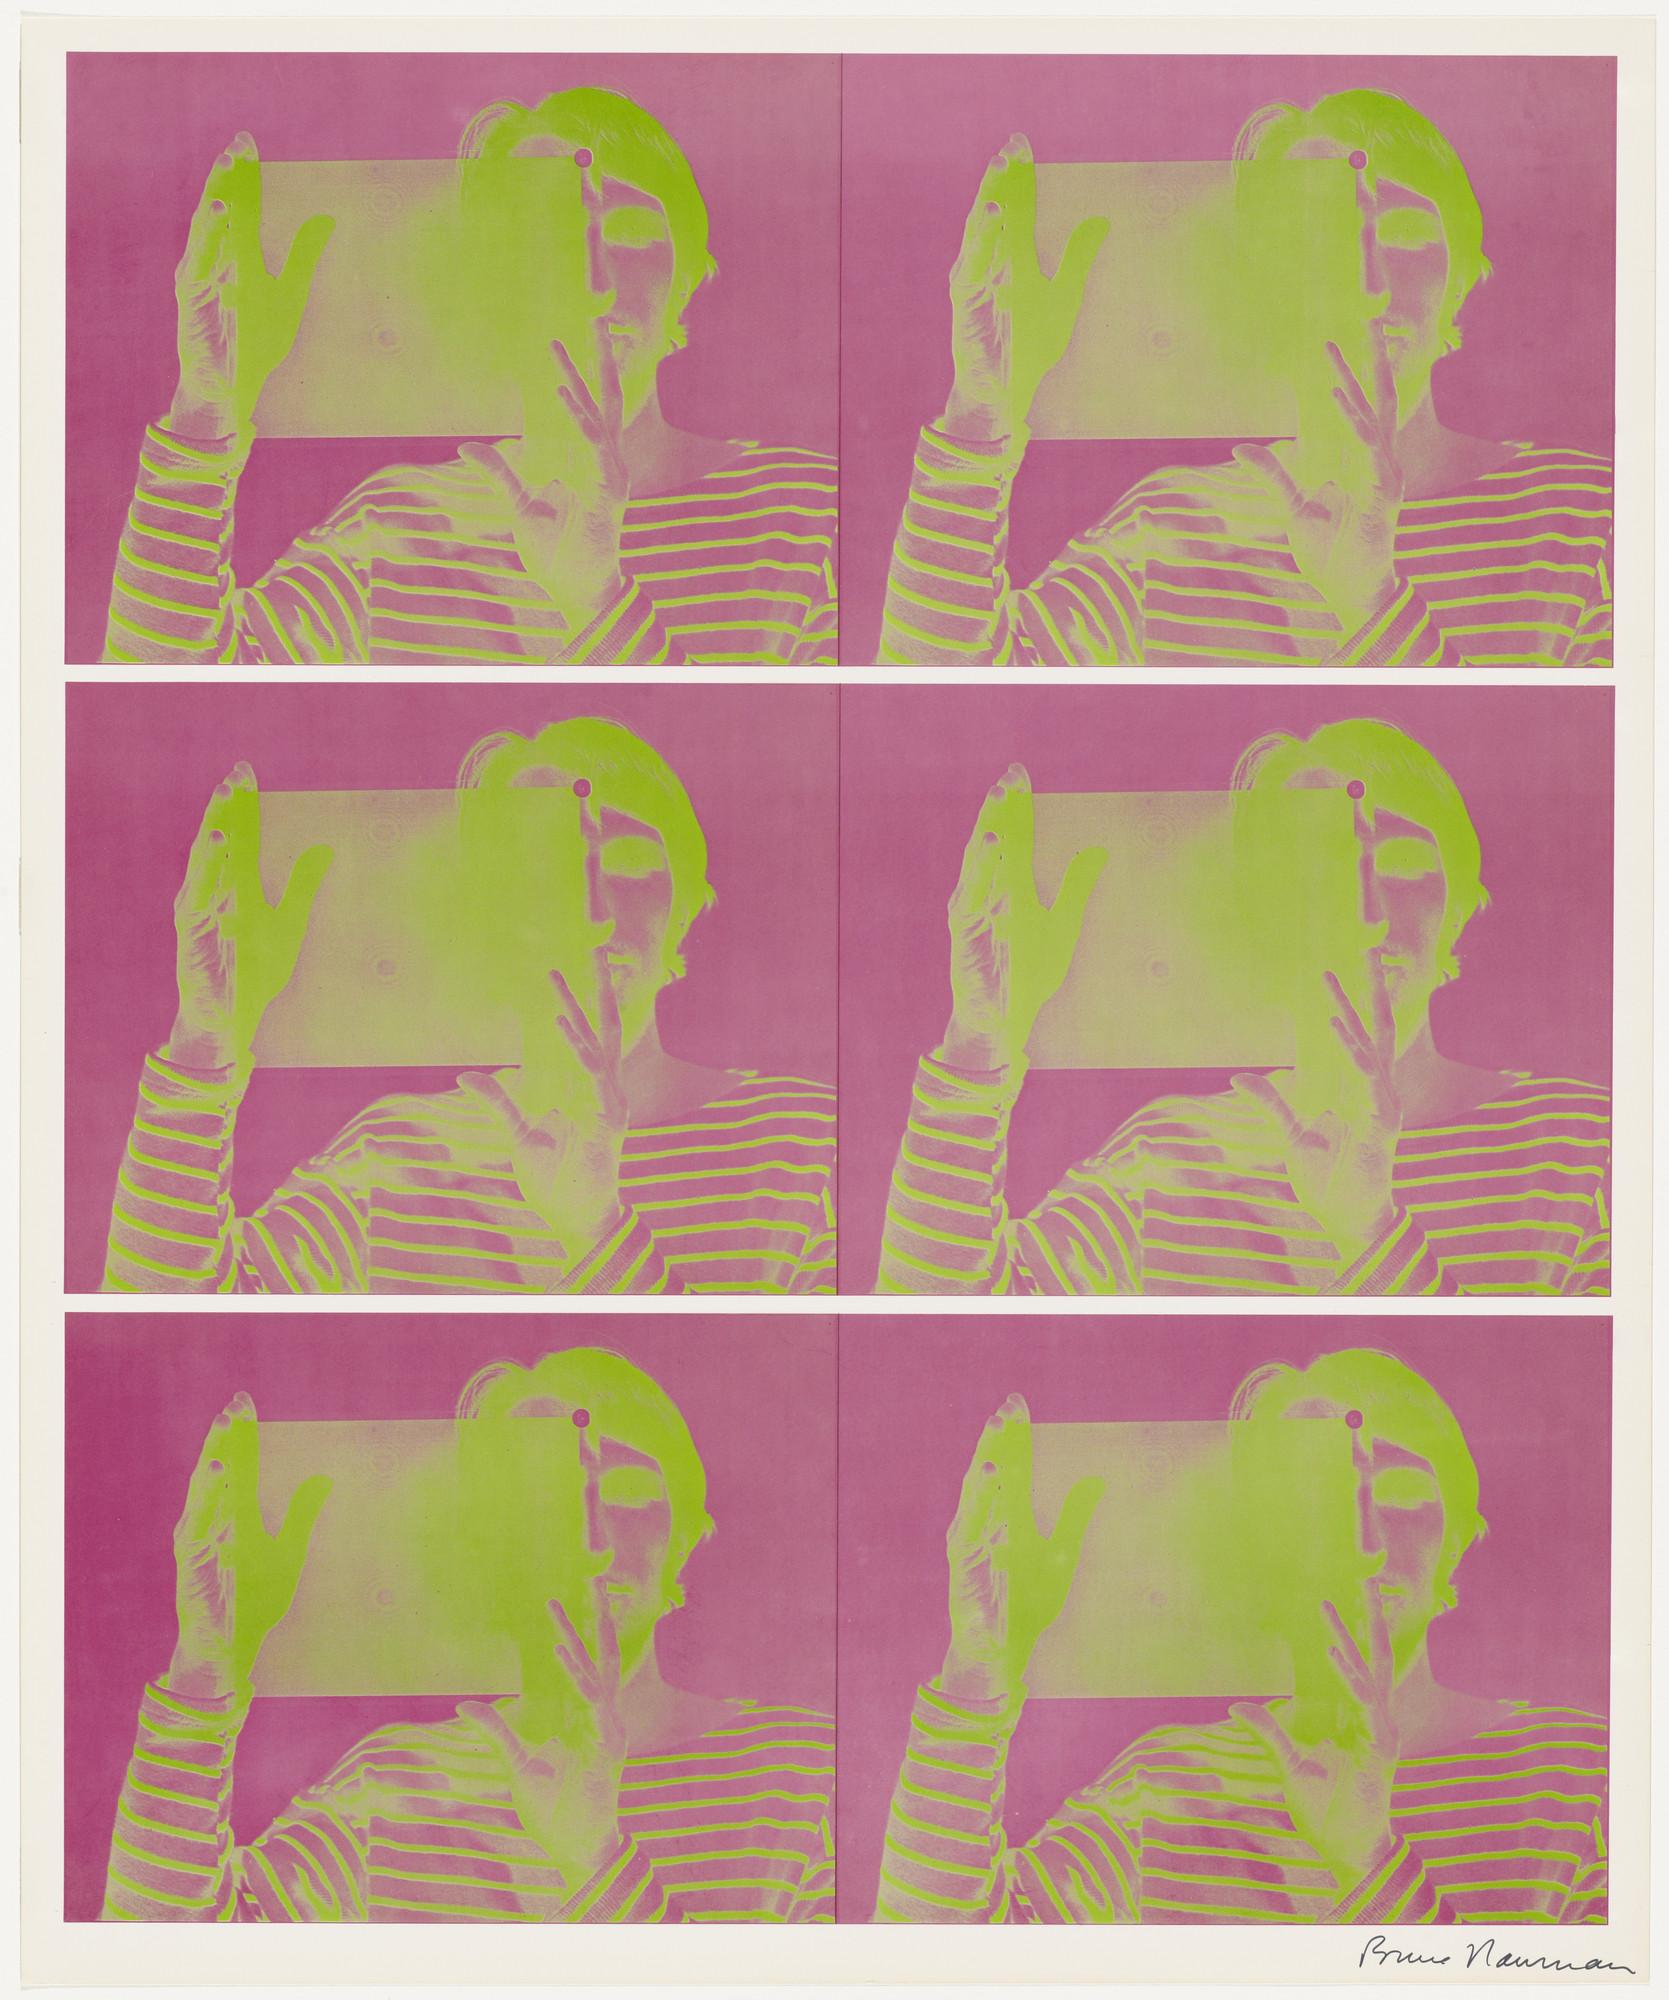  Sequence, 1969, Litografia, Leo Castelli gallery, Body Art - Print by Bruce Nauman